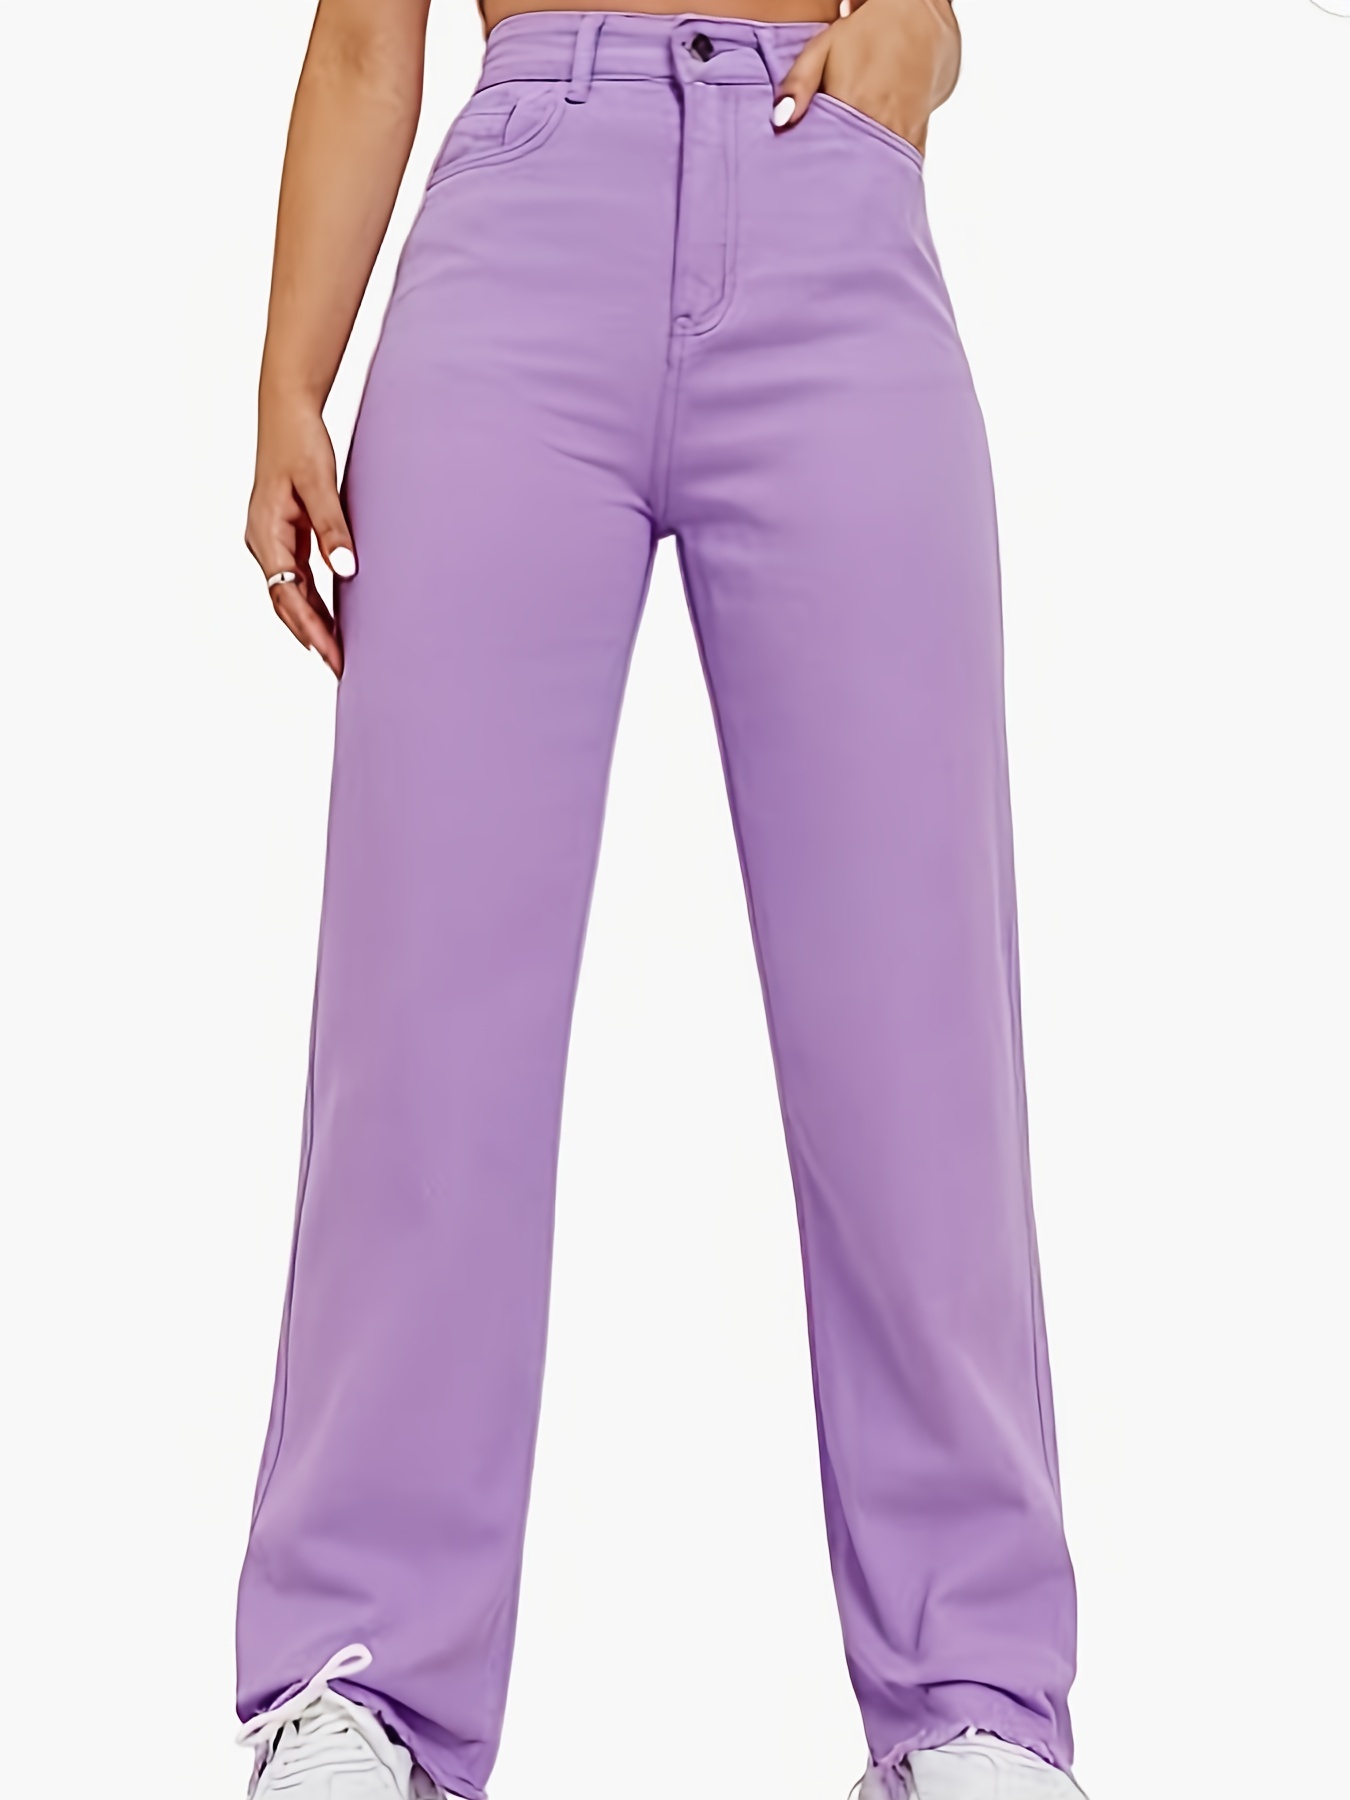 Purple Brand Straight-Leg Jeans w/ Tags - Blue, 14 Rise Jeans, Clothing -  WPBUR21405